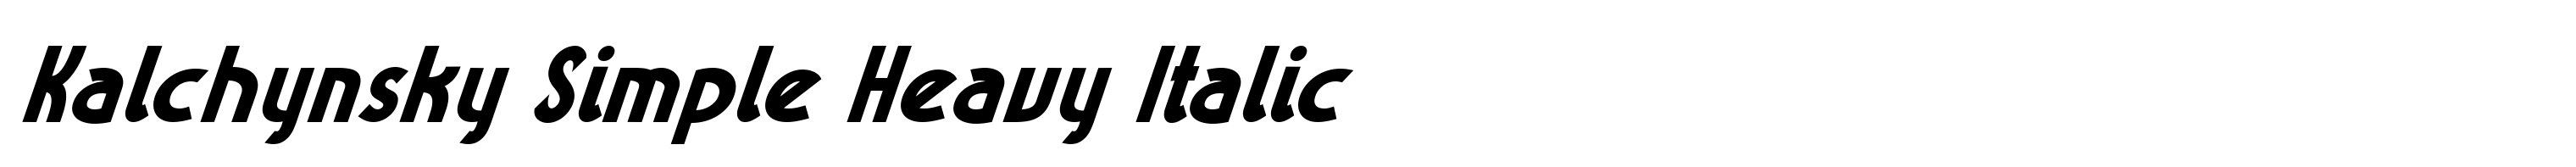 Kalchynsky Simple Heavy Italic